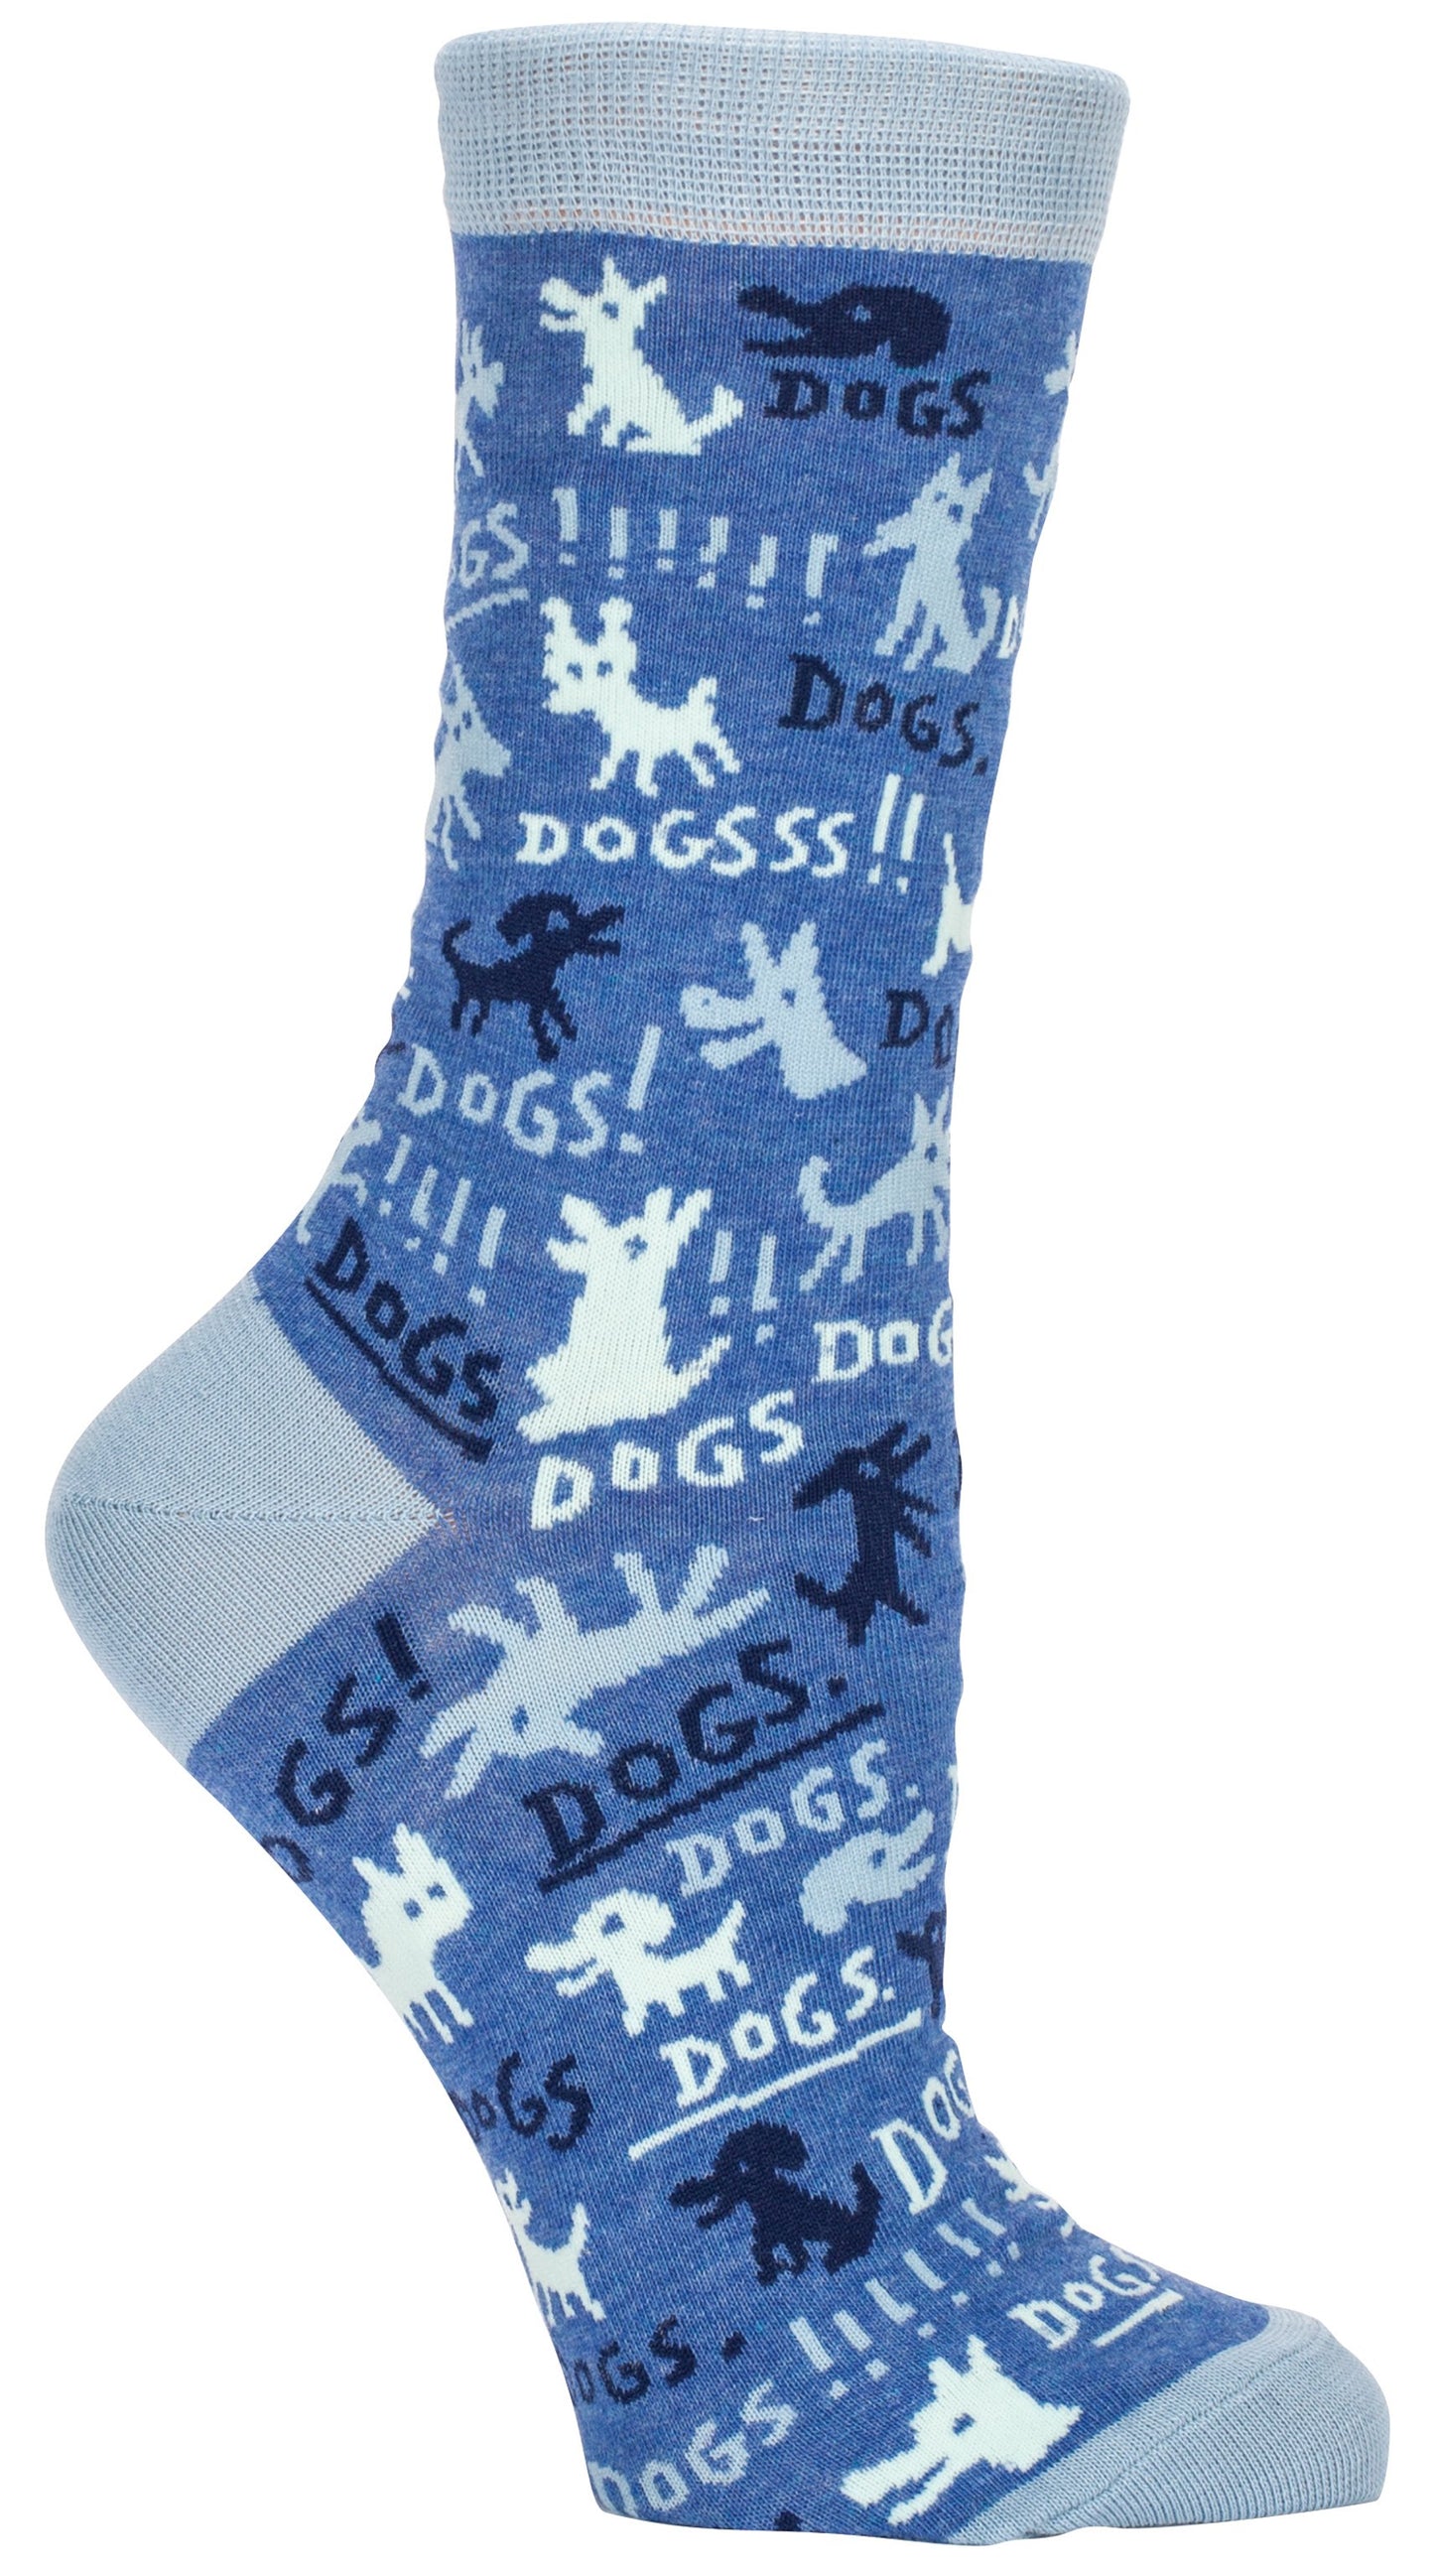 Blue Q - Women's Crew Socks - Dogs!